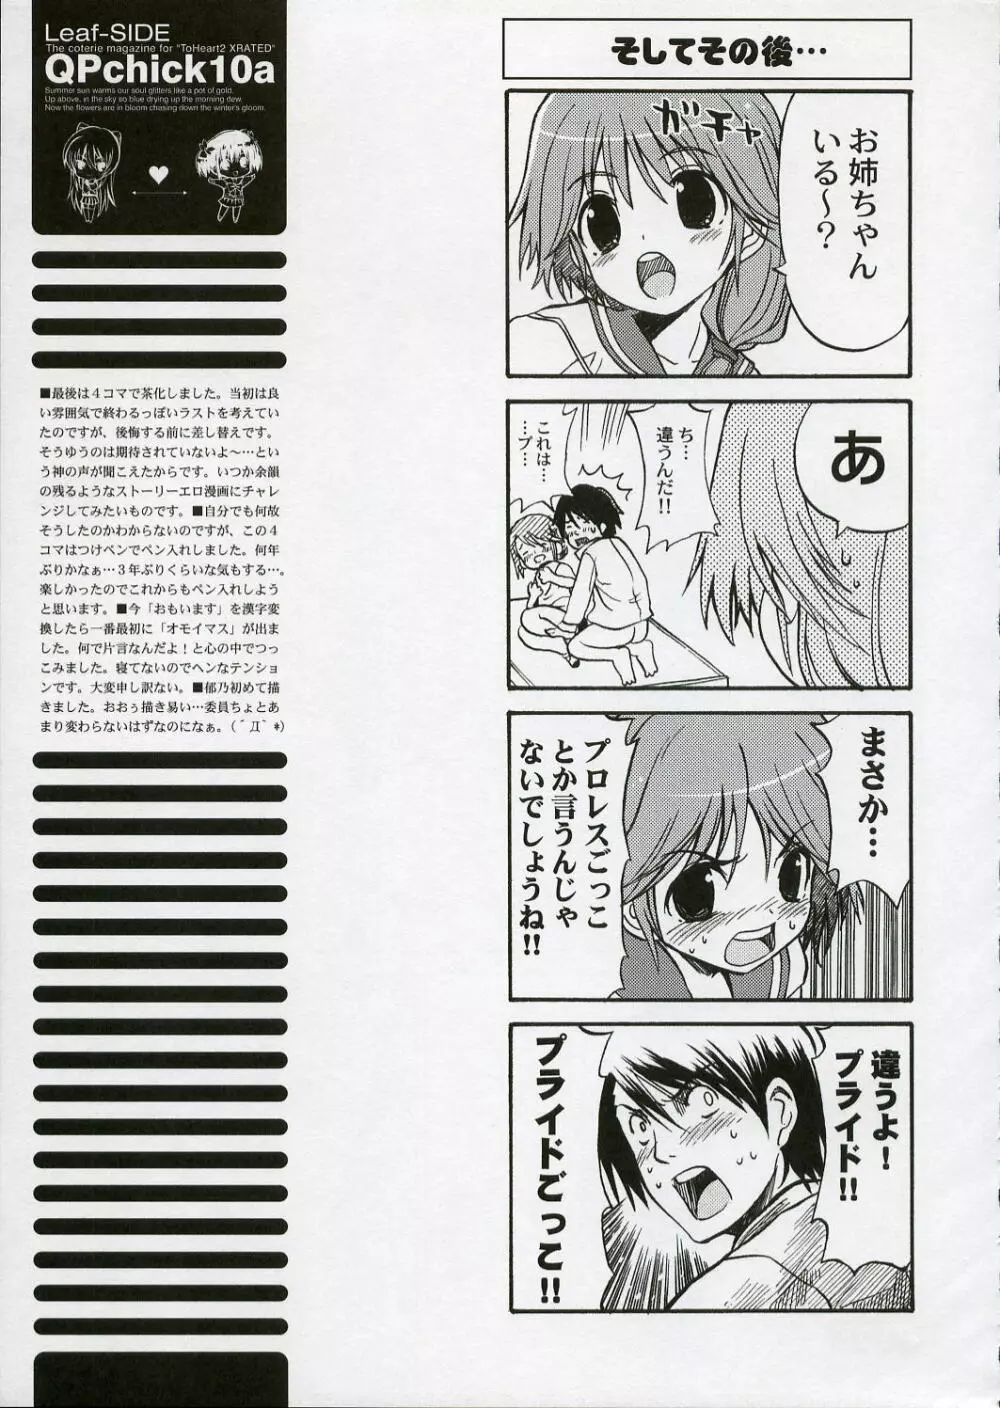 [QP:flapper (ぴめこ、トメ太)] QPchick10a Leaf-SIDE -Re:Re:CHERRY- (トゥハート2) [2006年4月] 42ページ